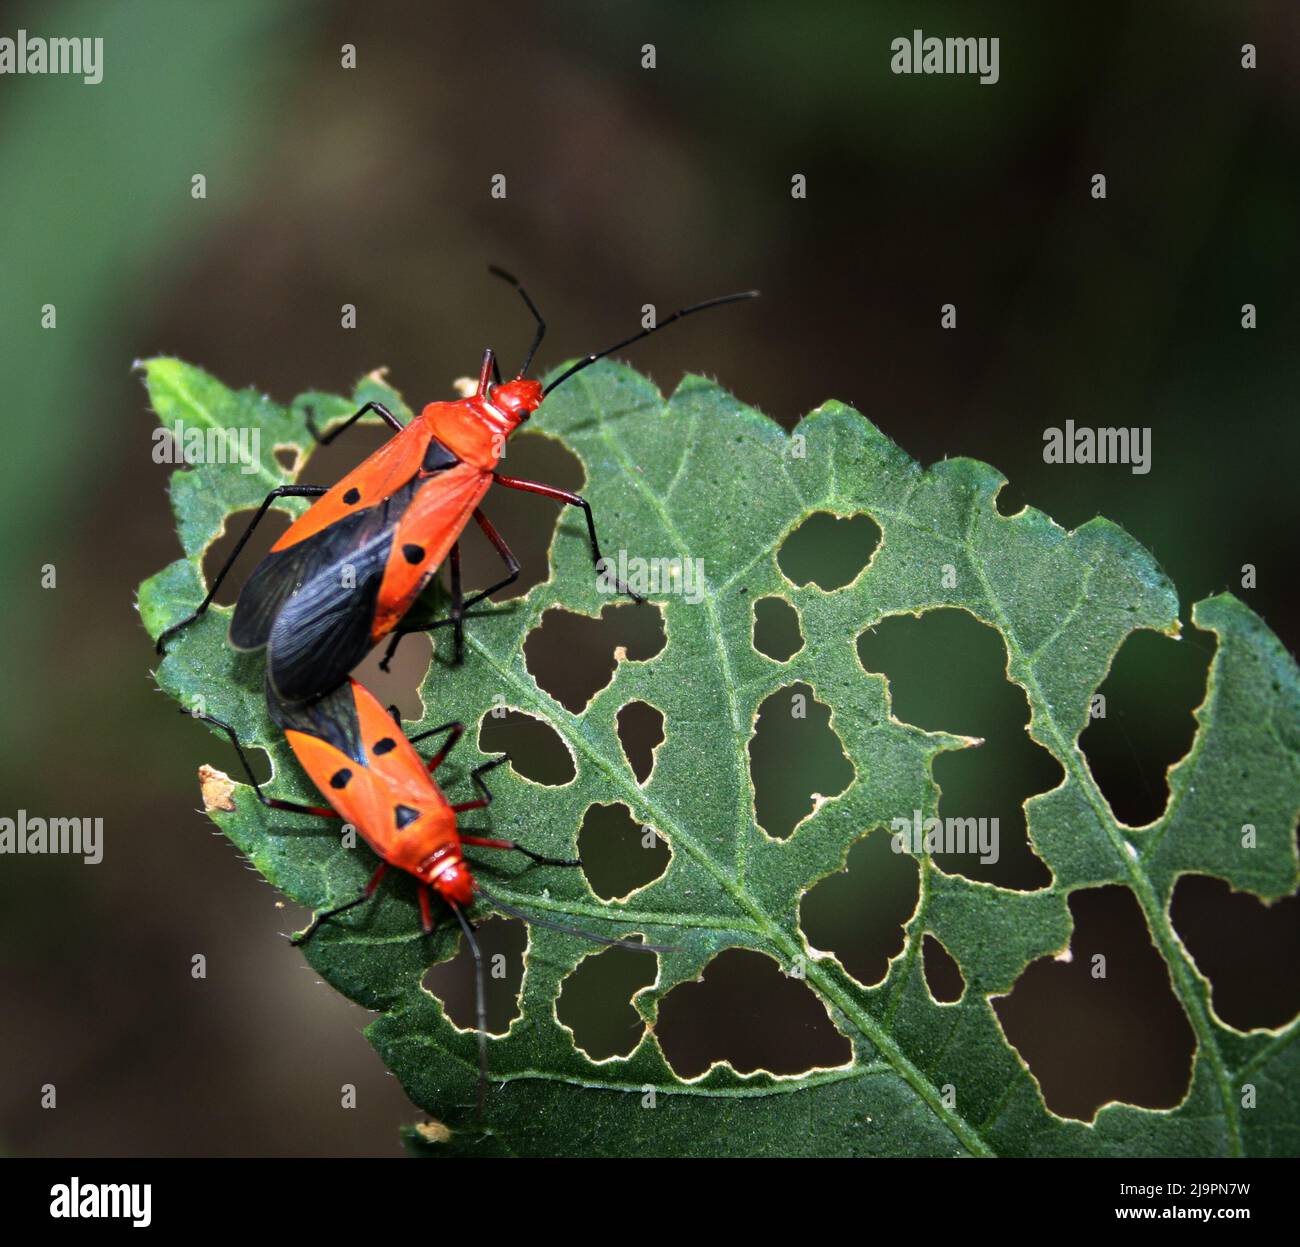 Common Red Cotton bugs (Dysdercus cingulatus) mating on a leaf : (pix SShukla) Stock Photo